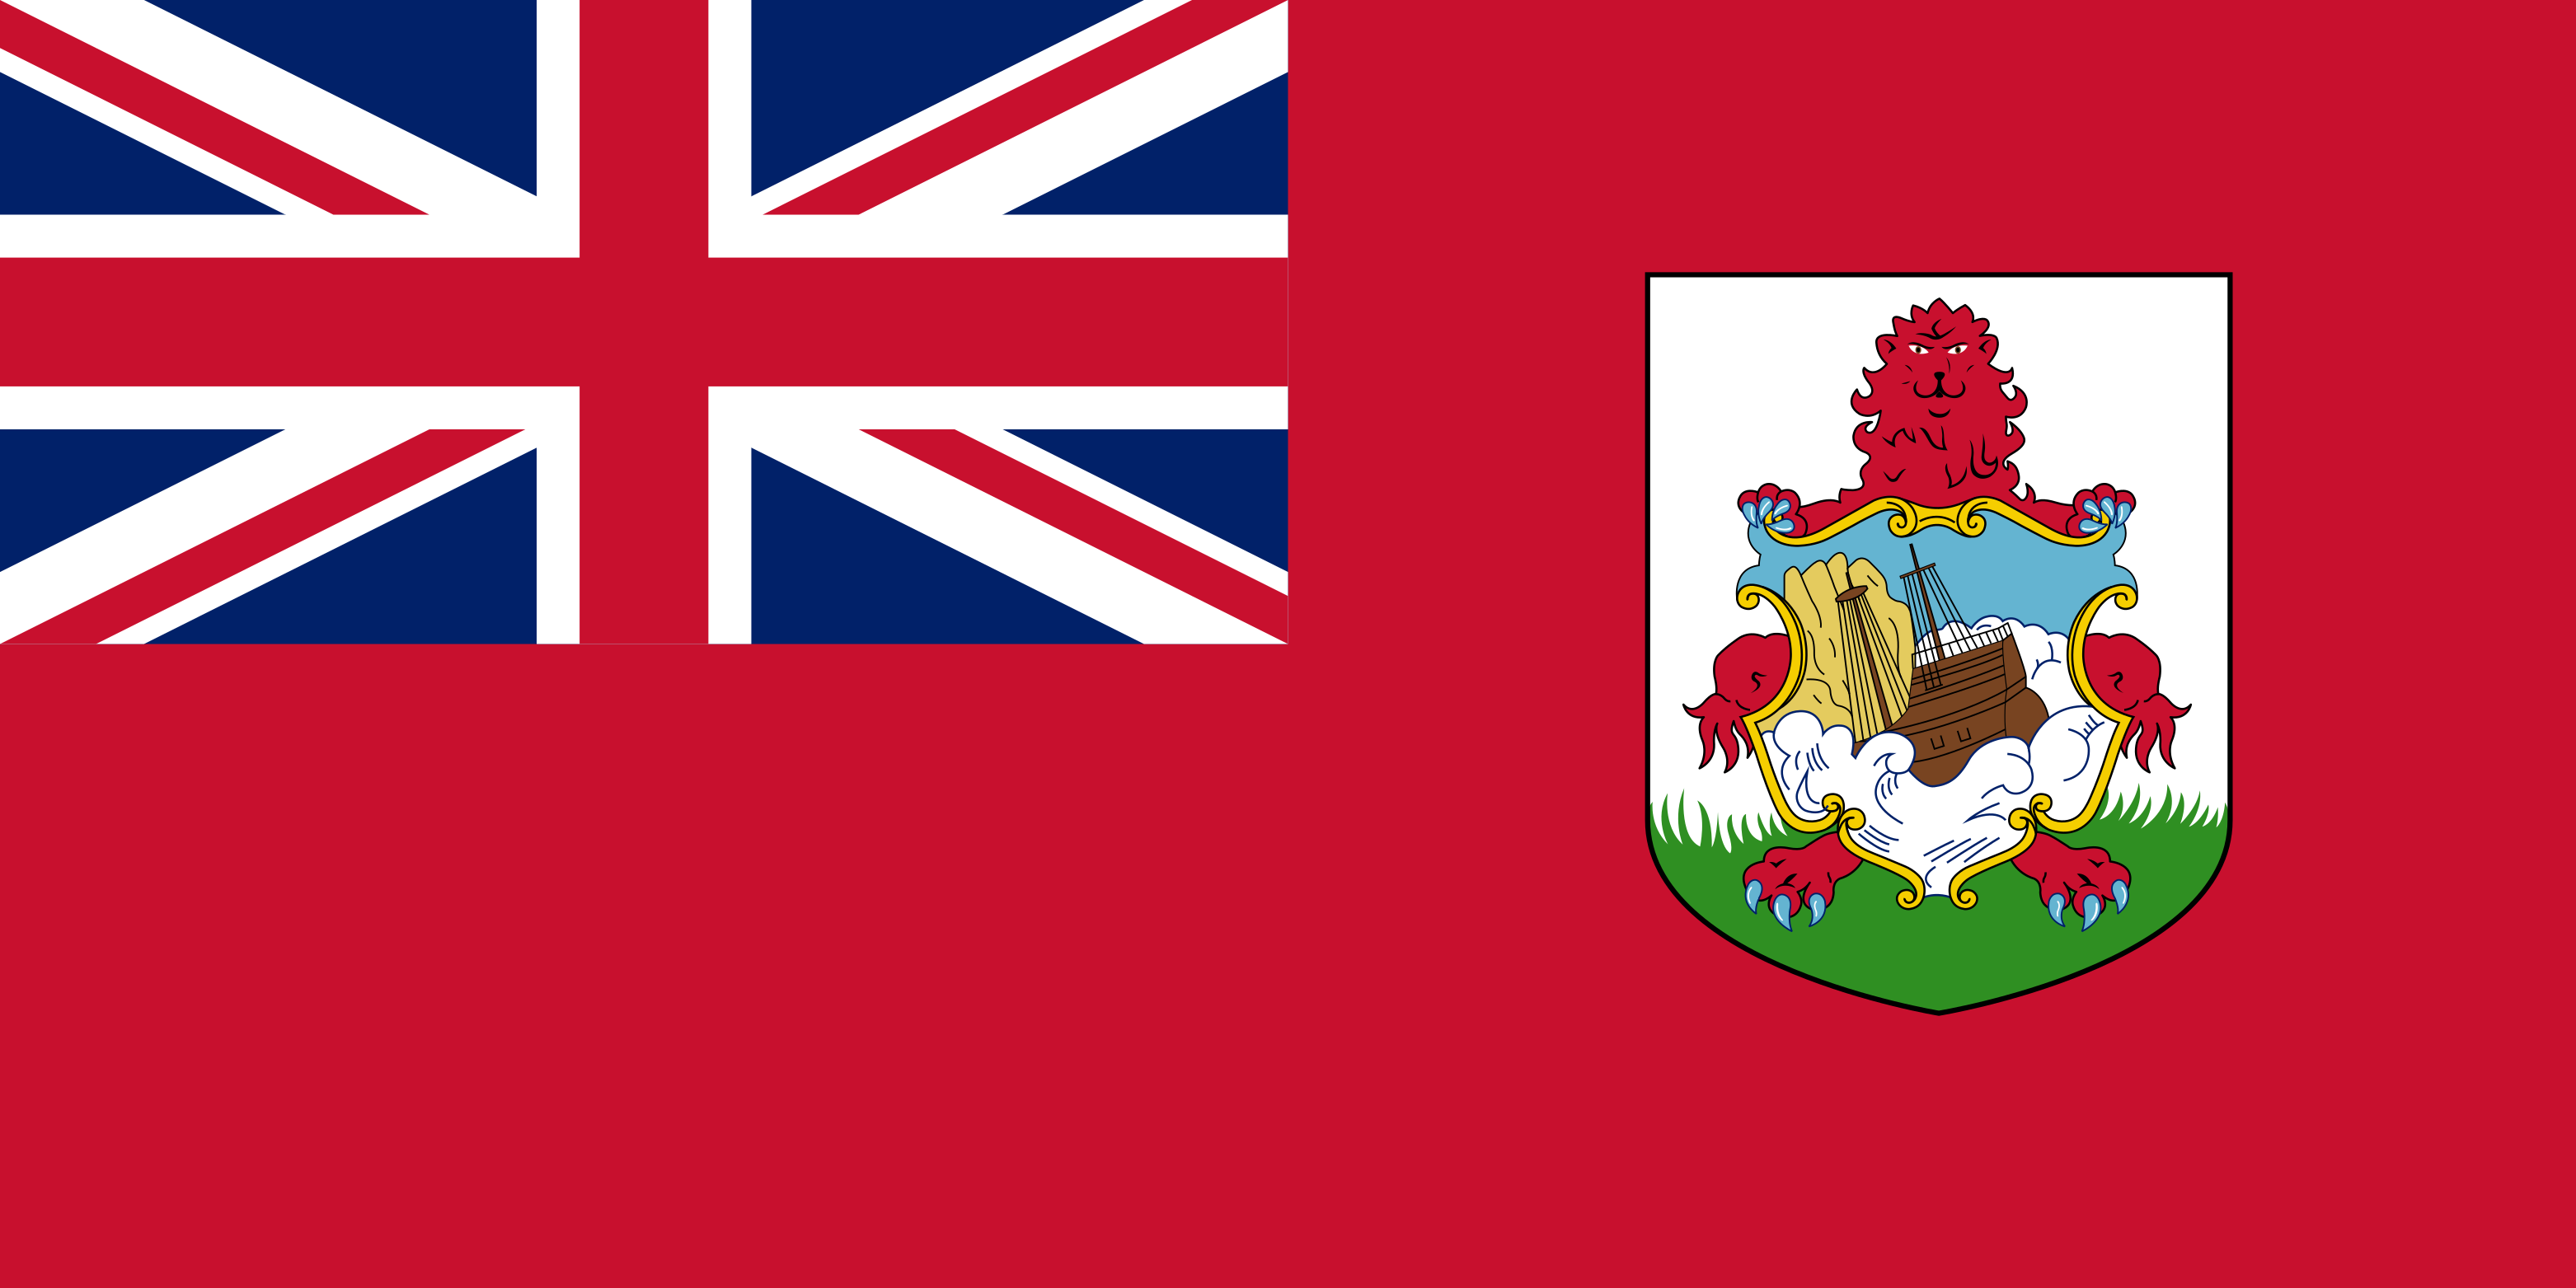 Free Bermuda Flag Documents: PDF, DOC, DOCX, HTML & More!